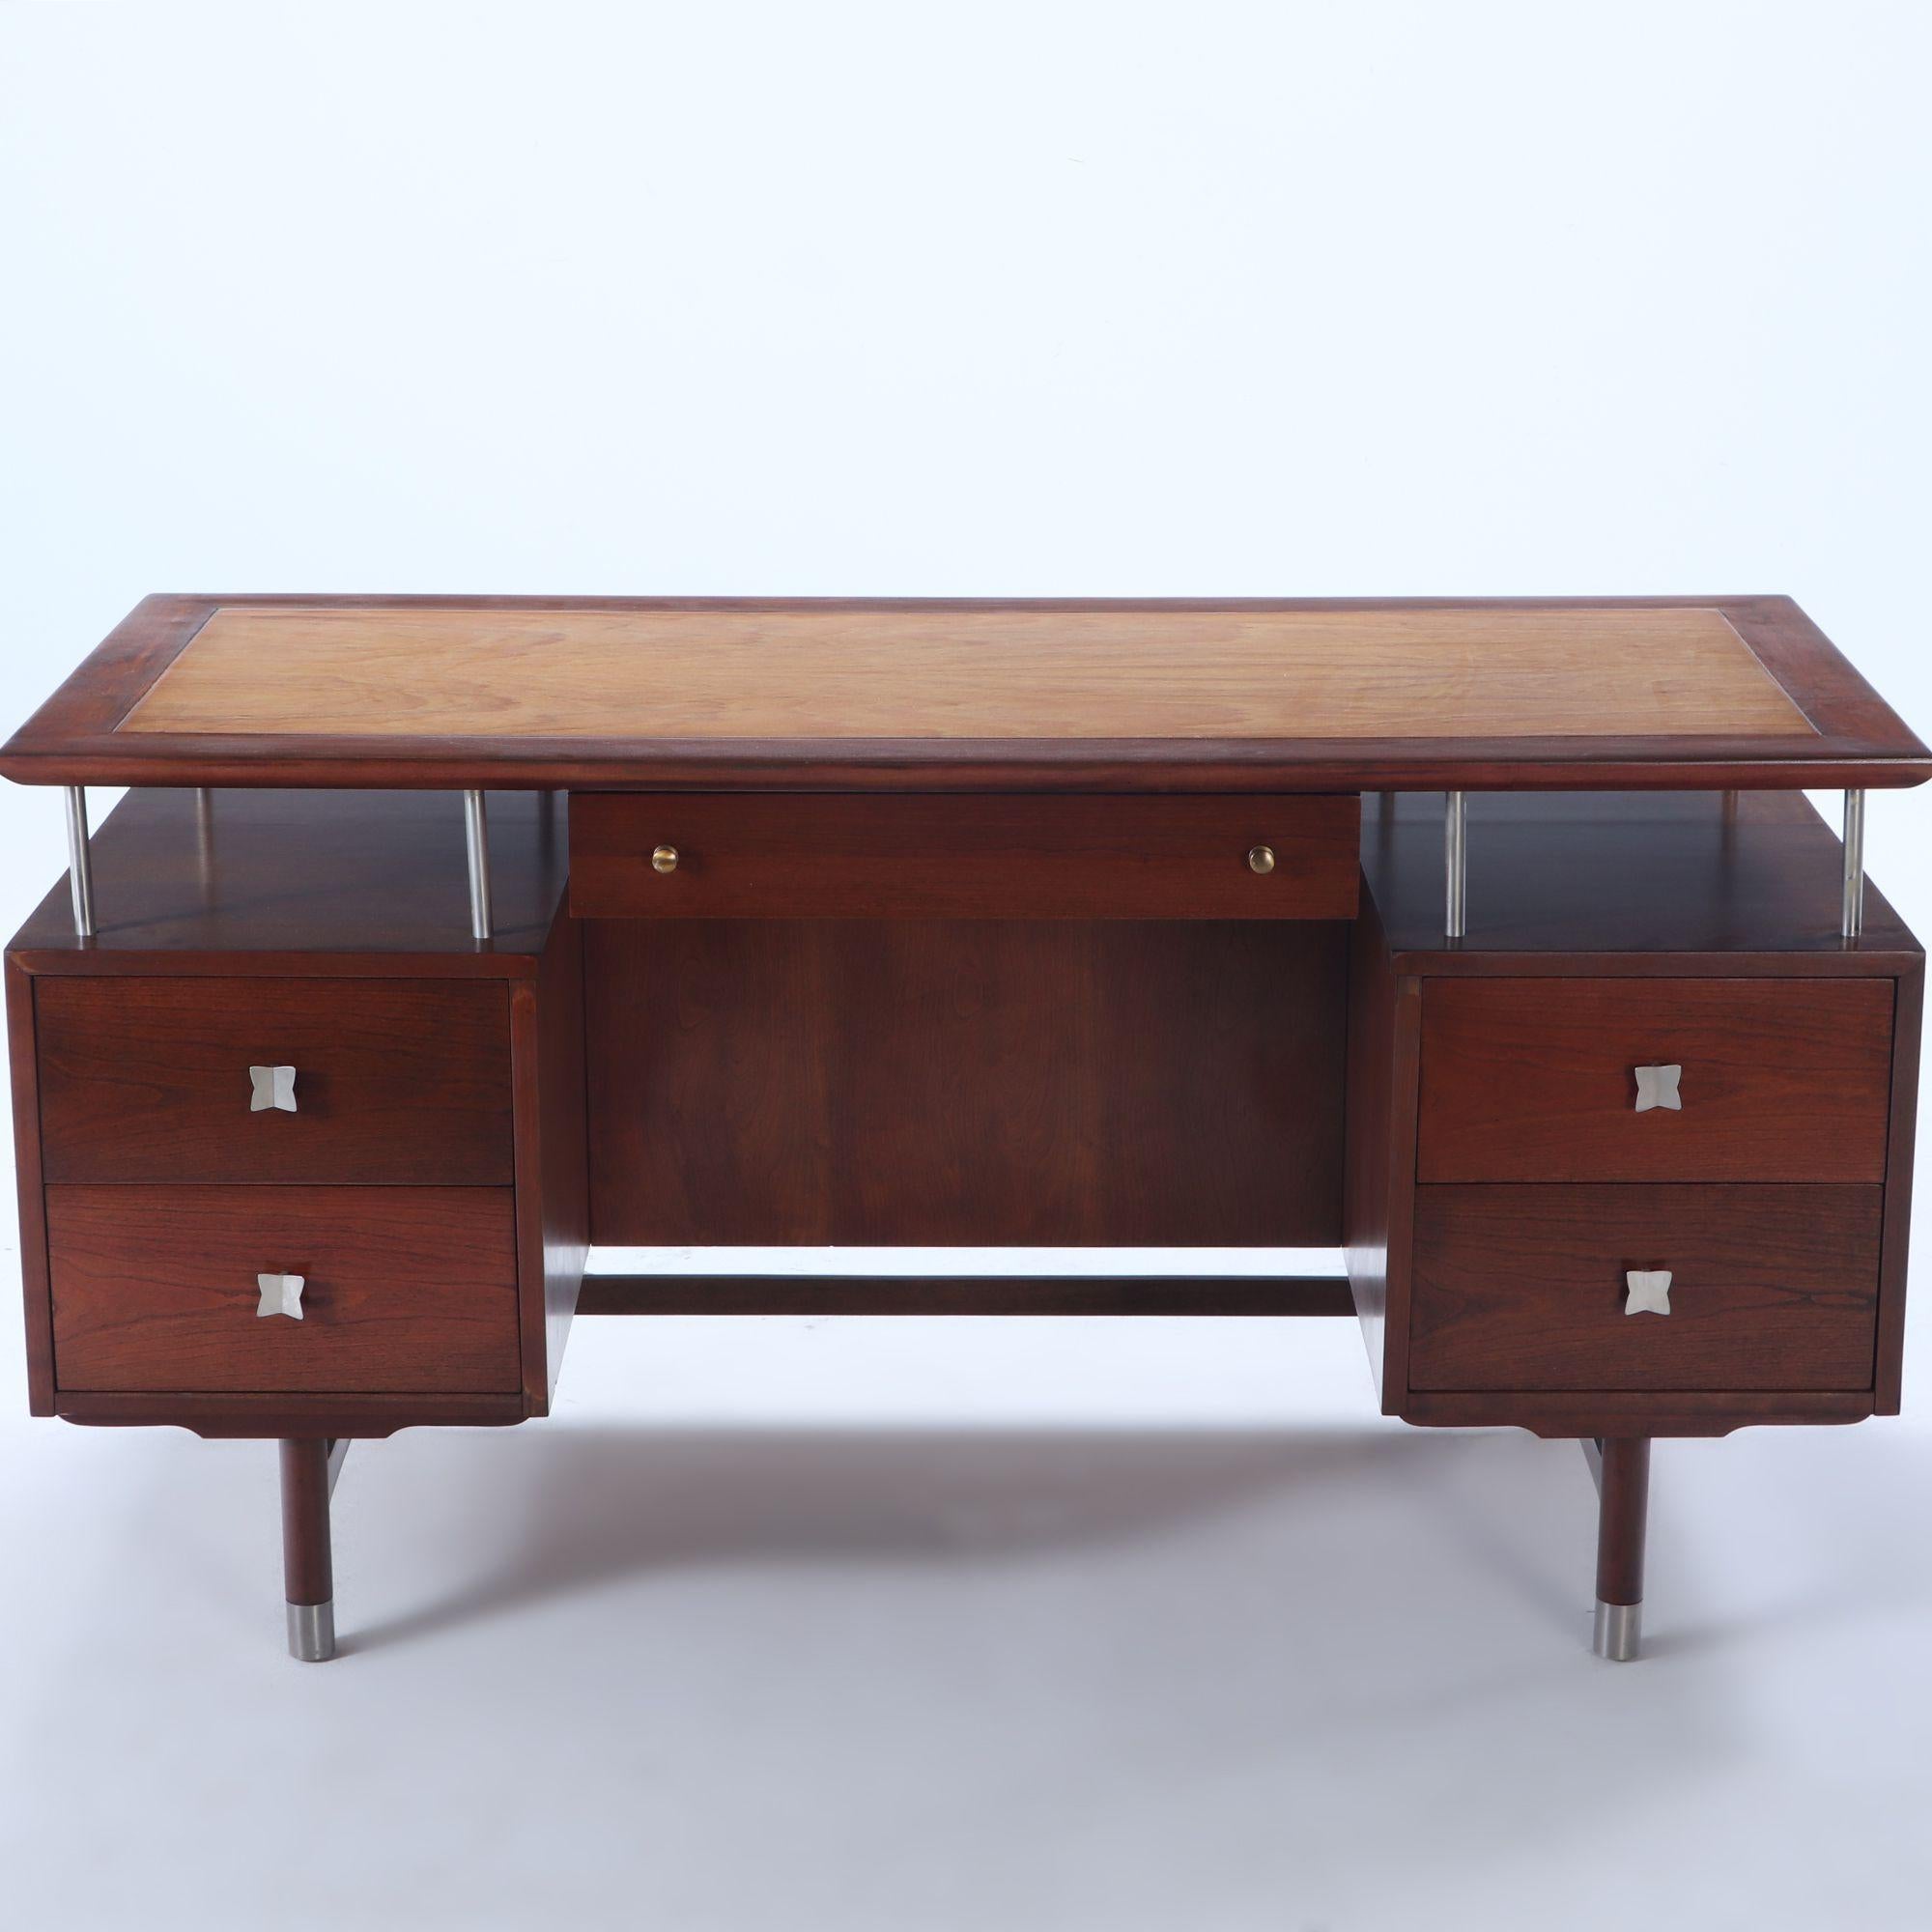 A Jens Risom mid century modern, double pedestal executive desk in cherry wood.
Kneehole measurements: 24.75